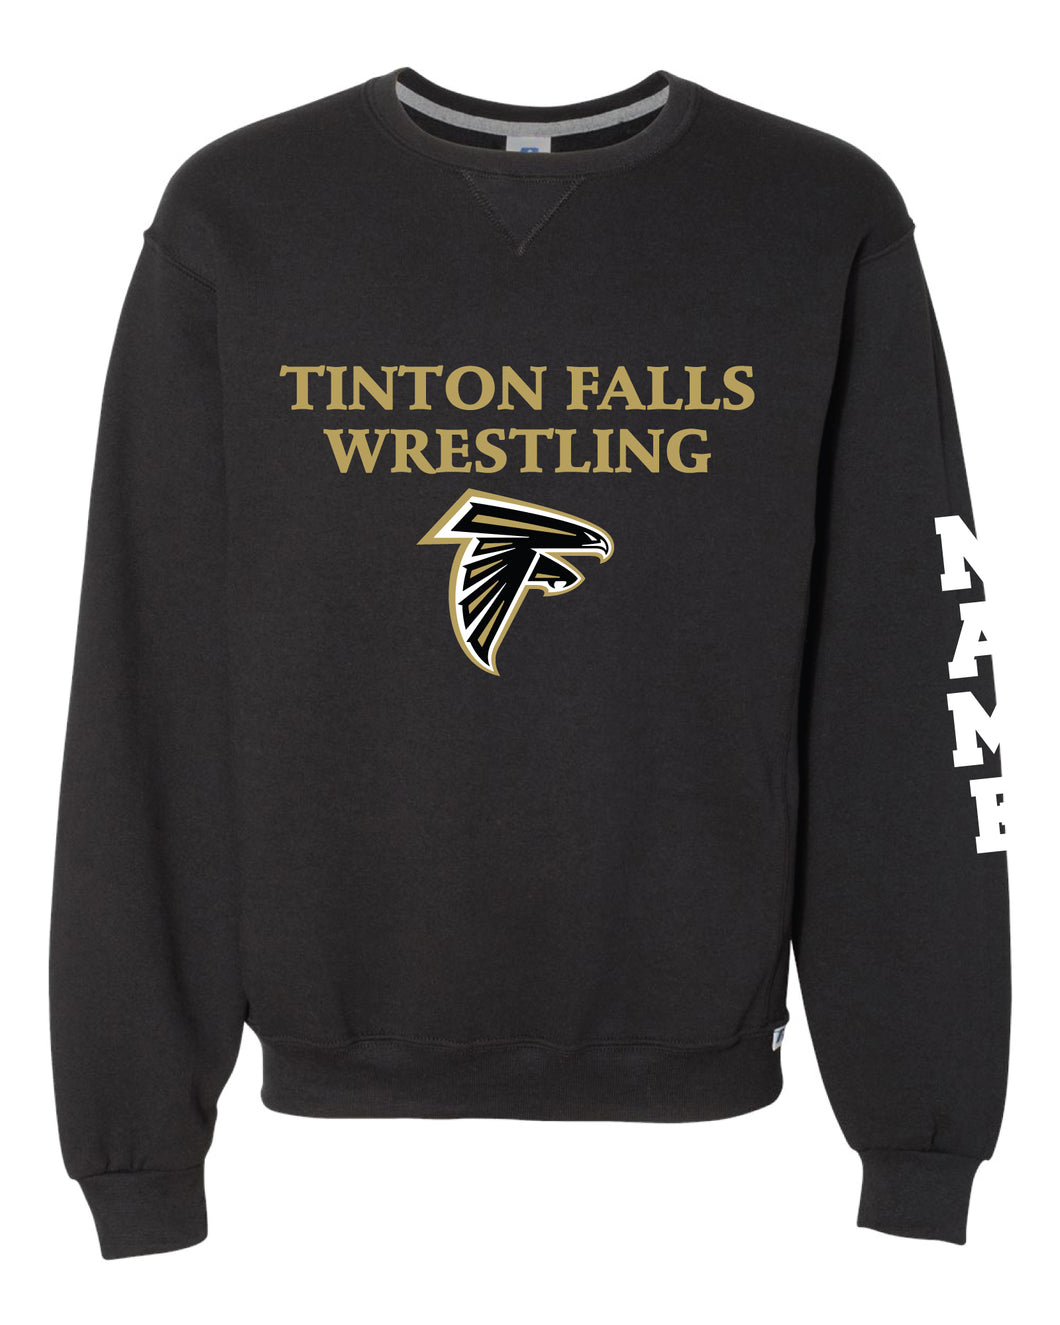 Tinton Falls Wrestling Russell Athletic Cotton Crewneck Sweatshirt - Black - 5KounT